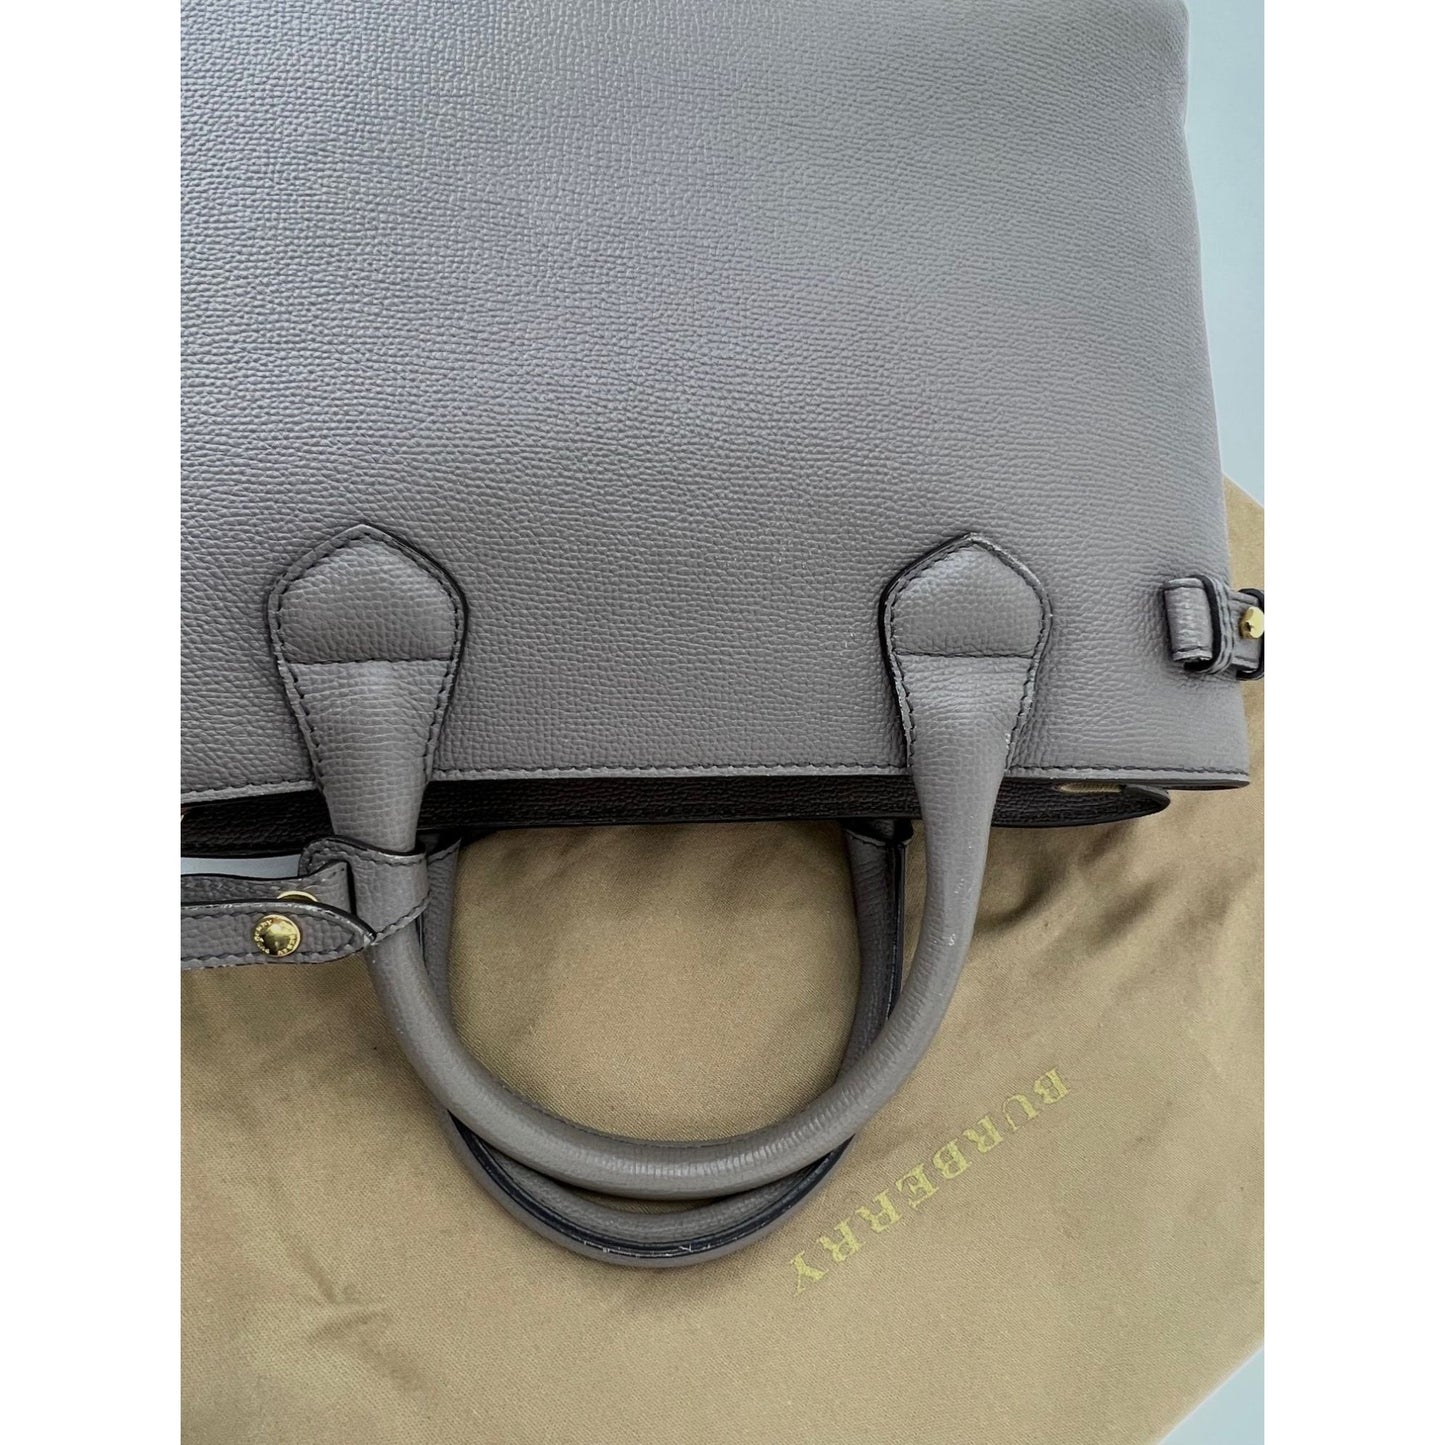 Medium Check & Leather Tote Bag